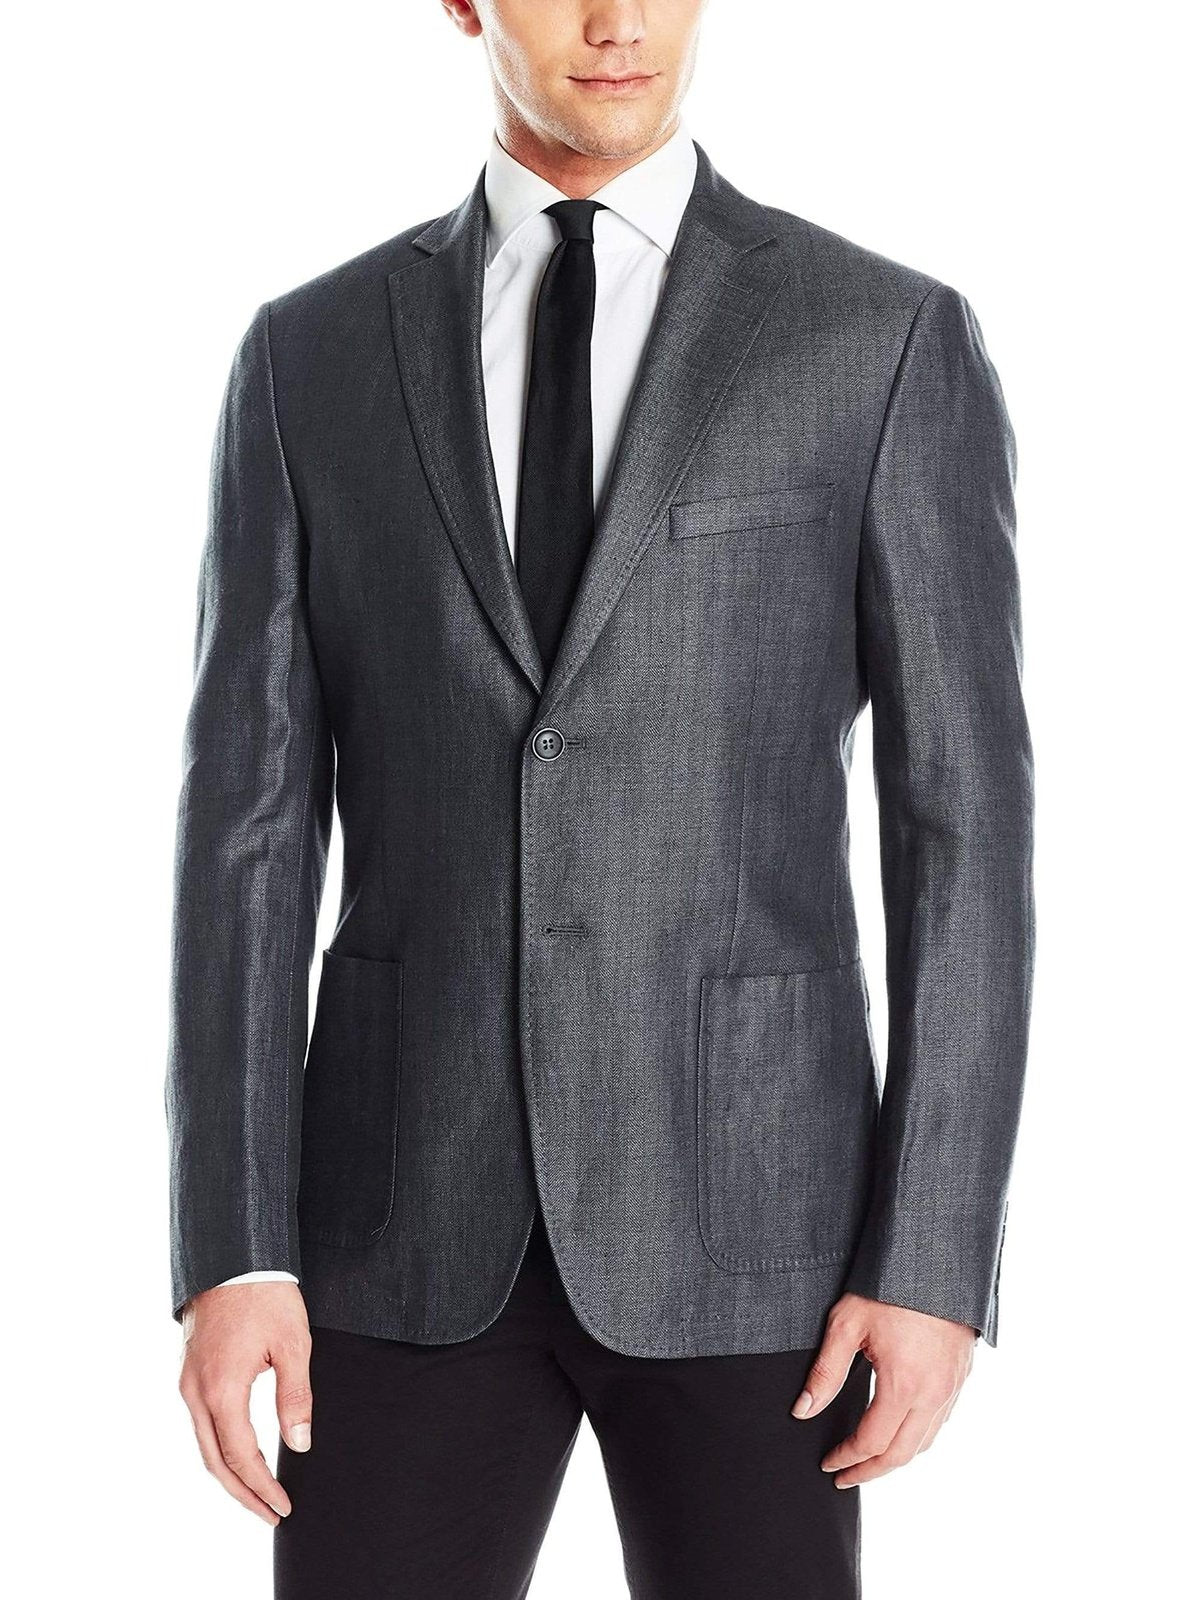 DKNY BLAZERS XL Men's DKNY Classic Fit Gray Half Lined Lightweight Linen Summer Blazer Sportcoat